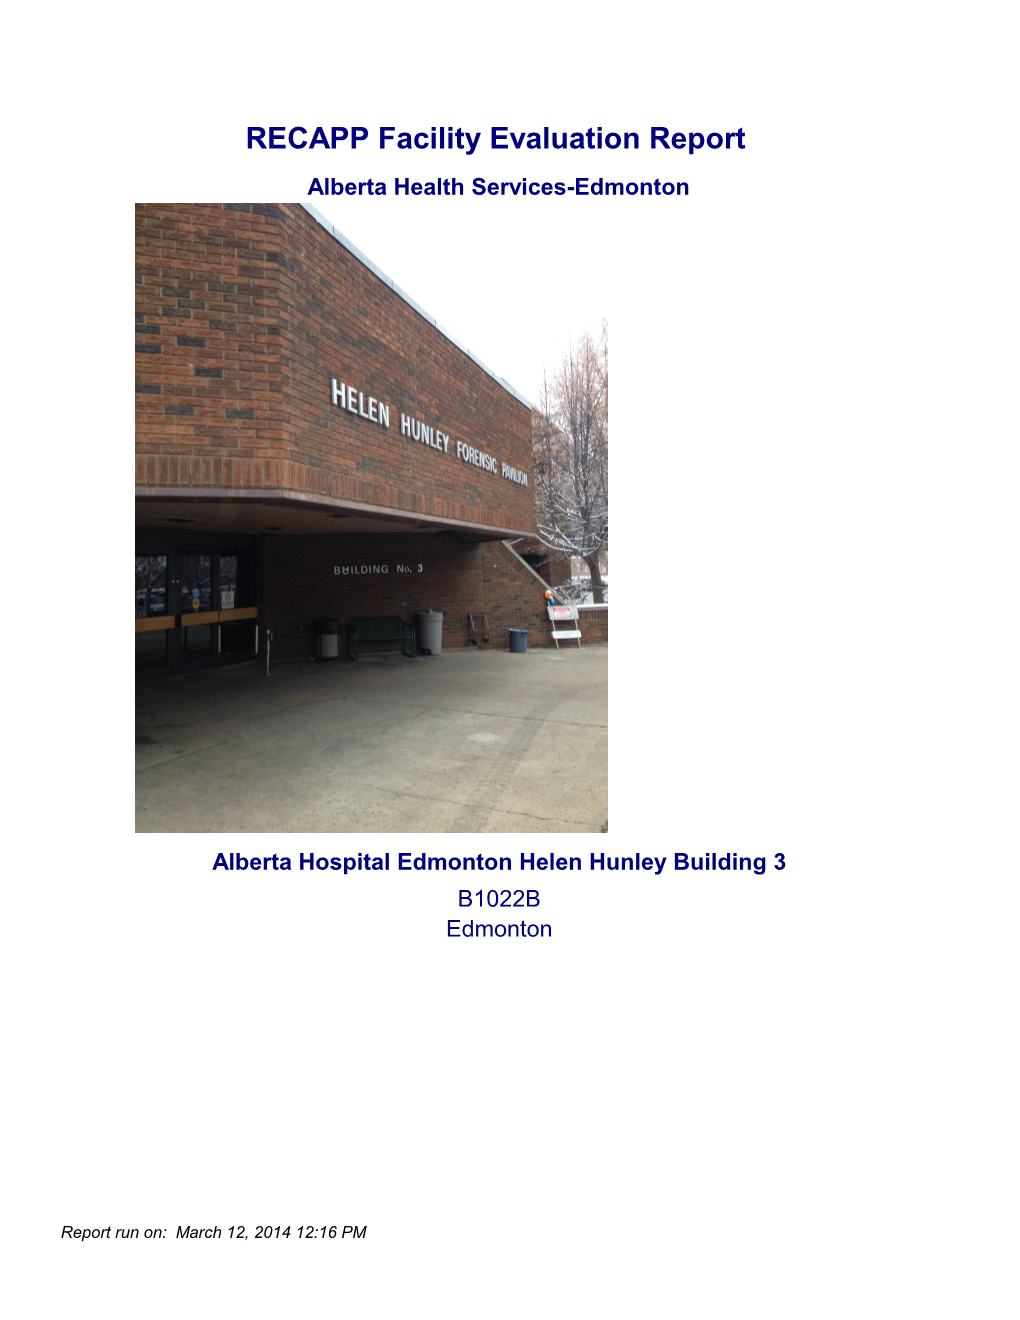 RECAPP Facility Evaluation Report : Alberta Hospital Edmonton Helen